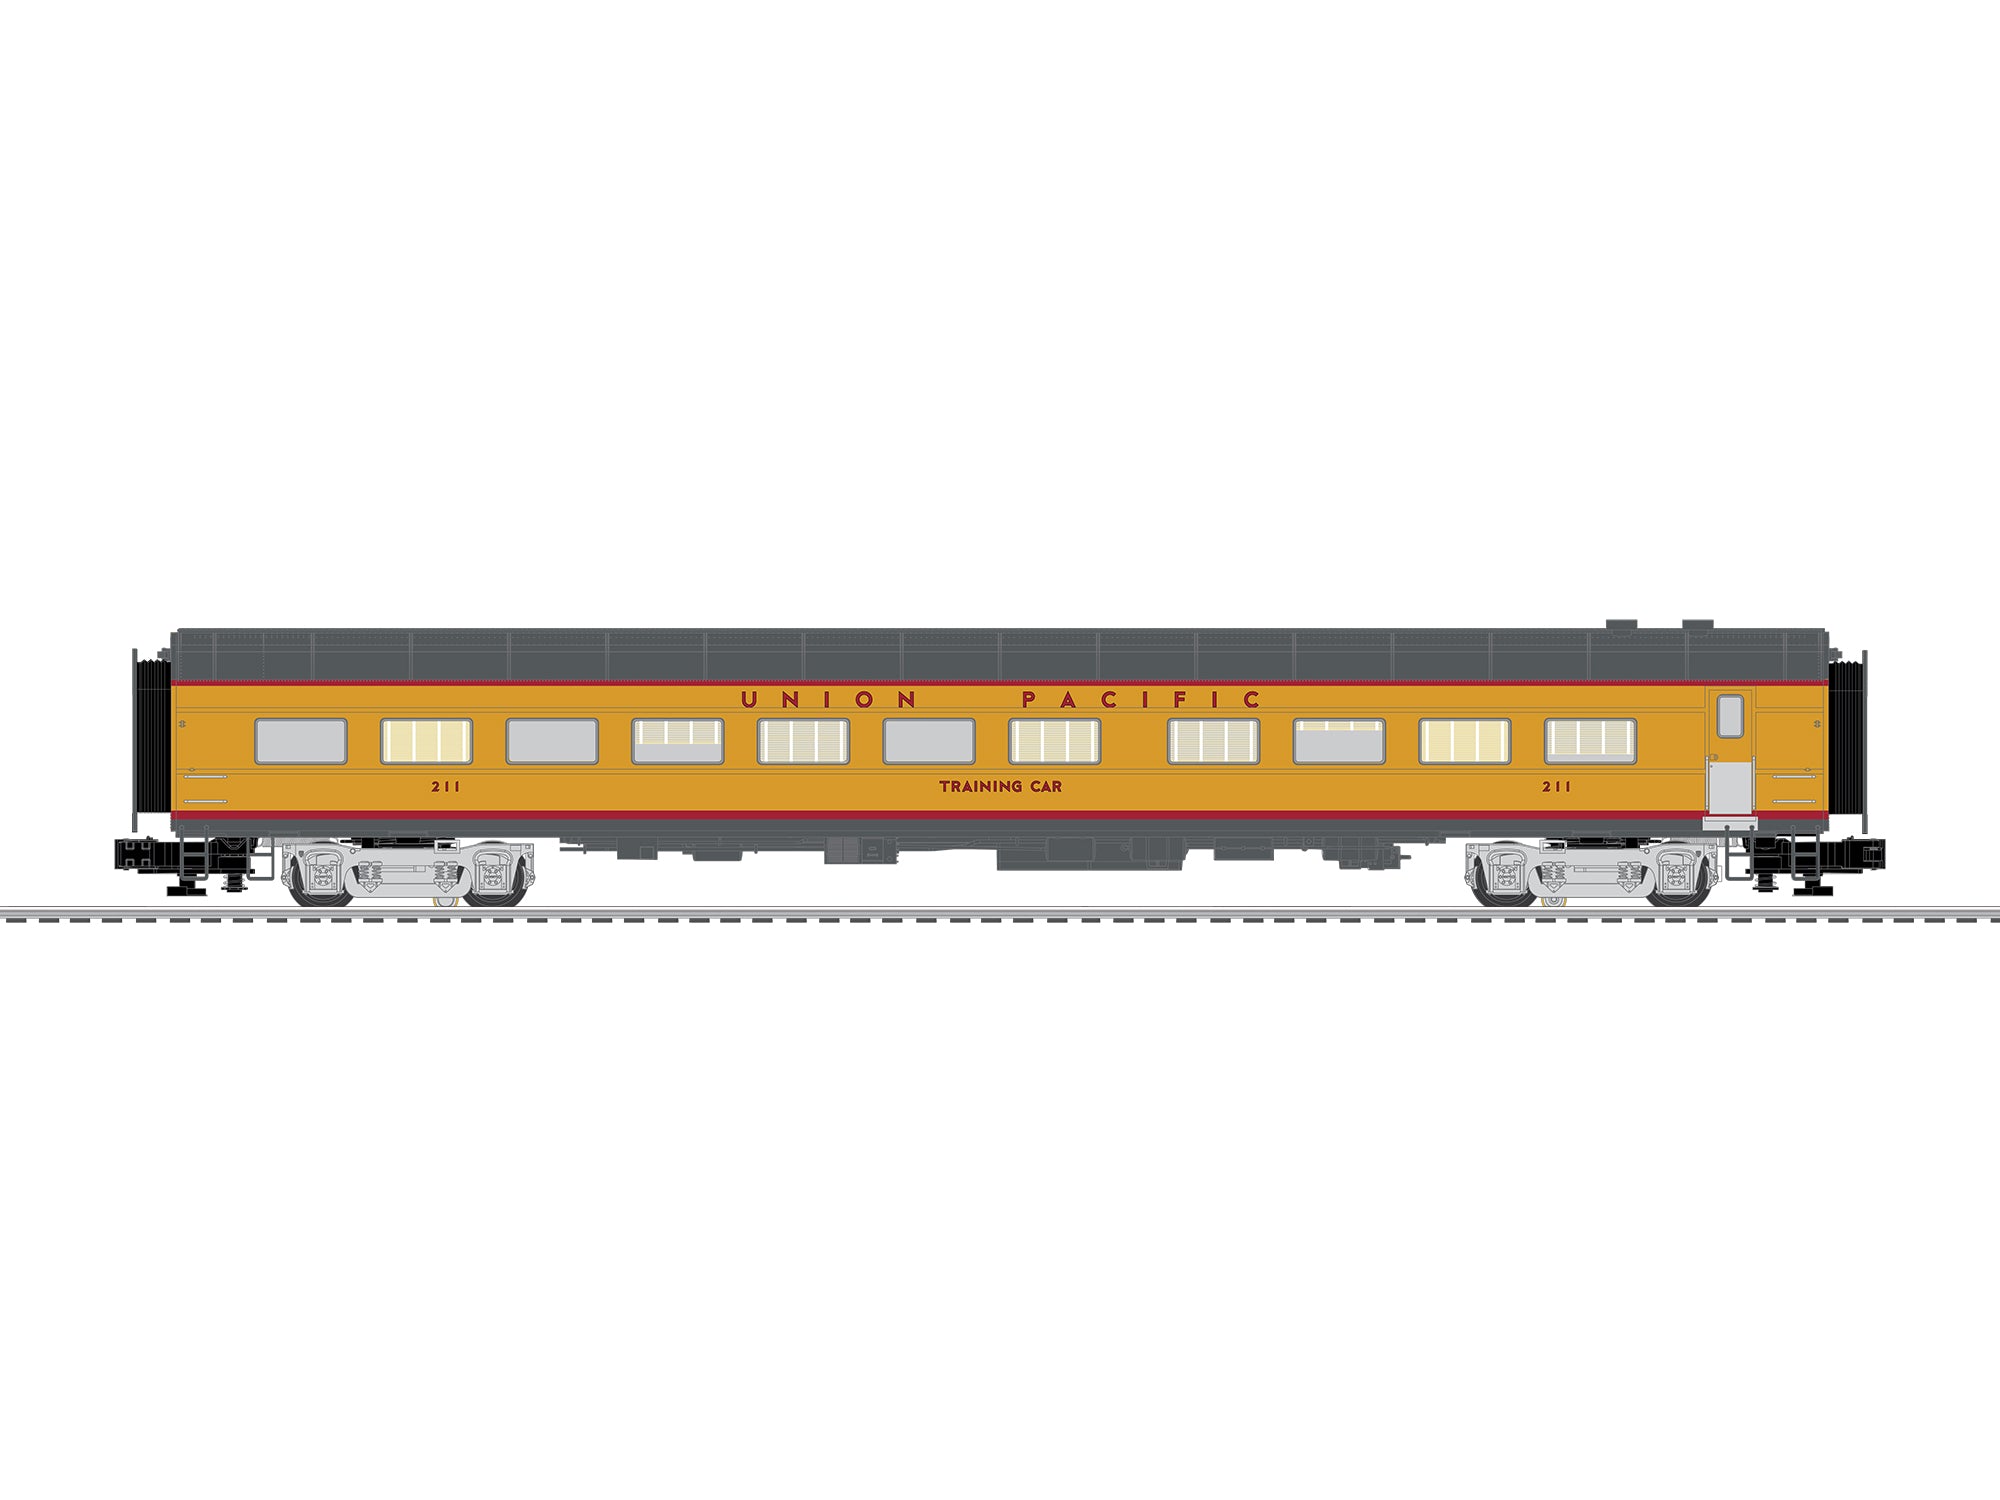 Póster Club Ferrocarril Midland Autoadhesivo 100x70cm #423